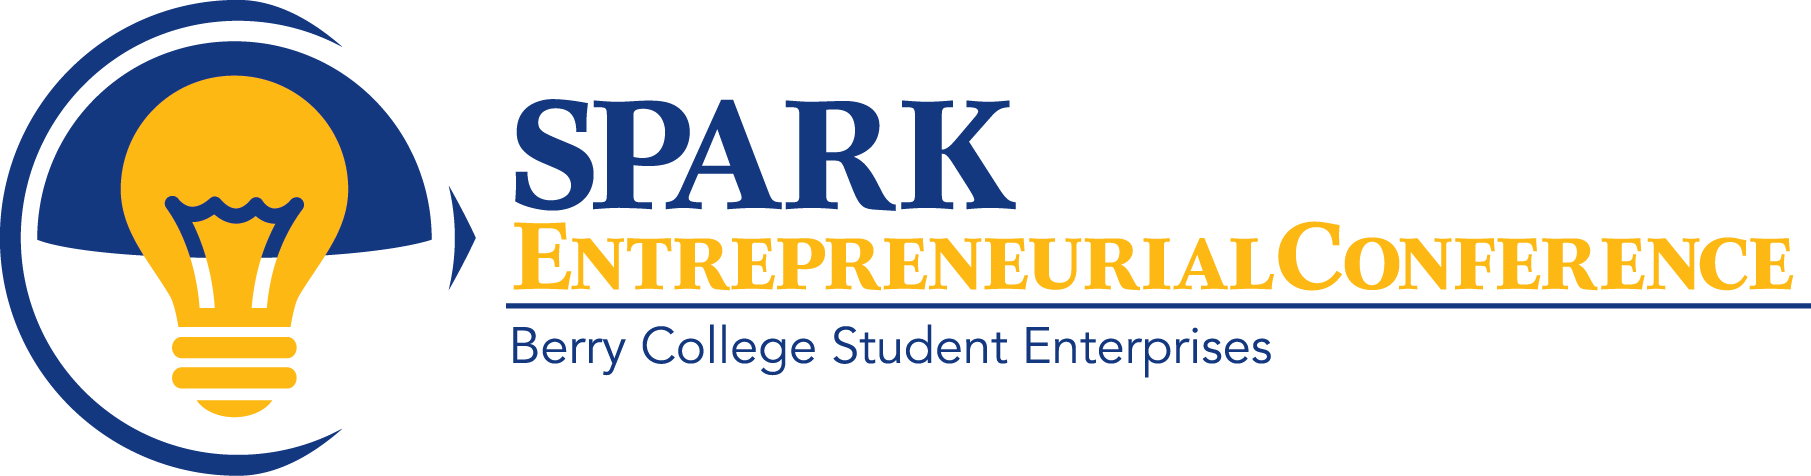 Spark Entrepreneurial Conference